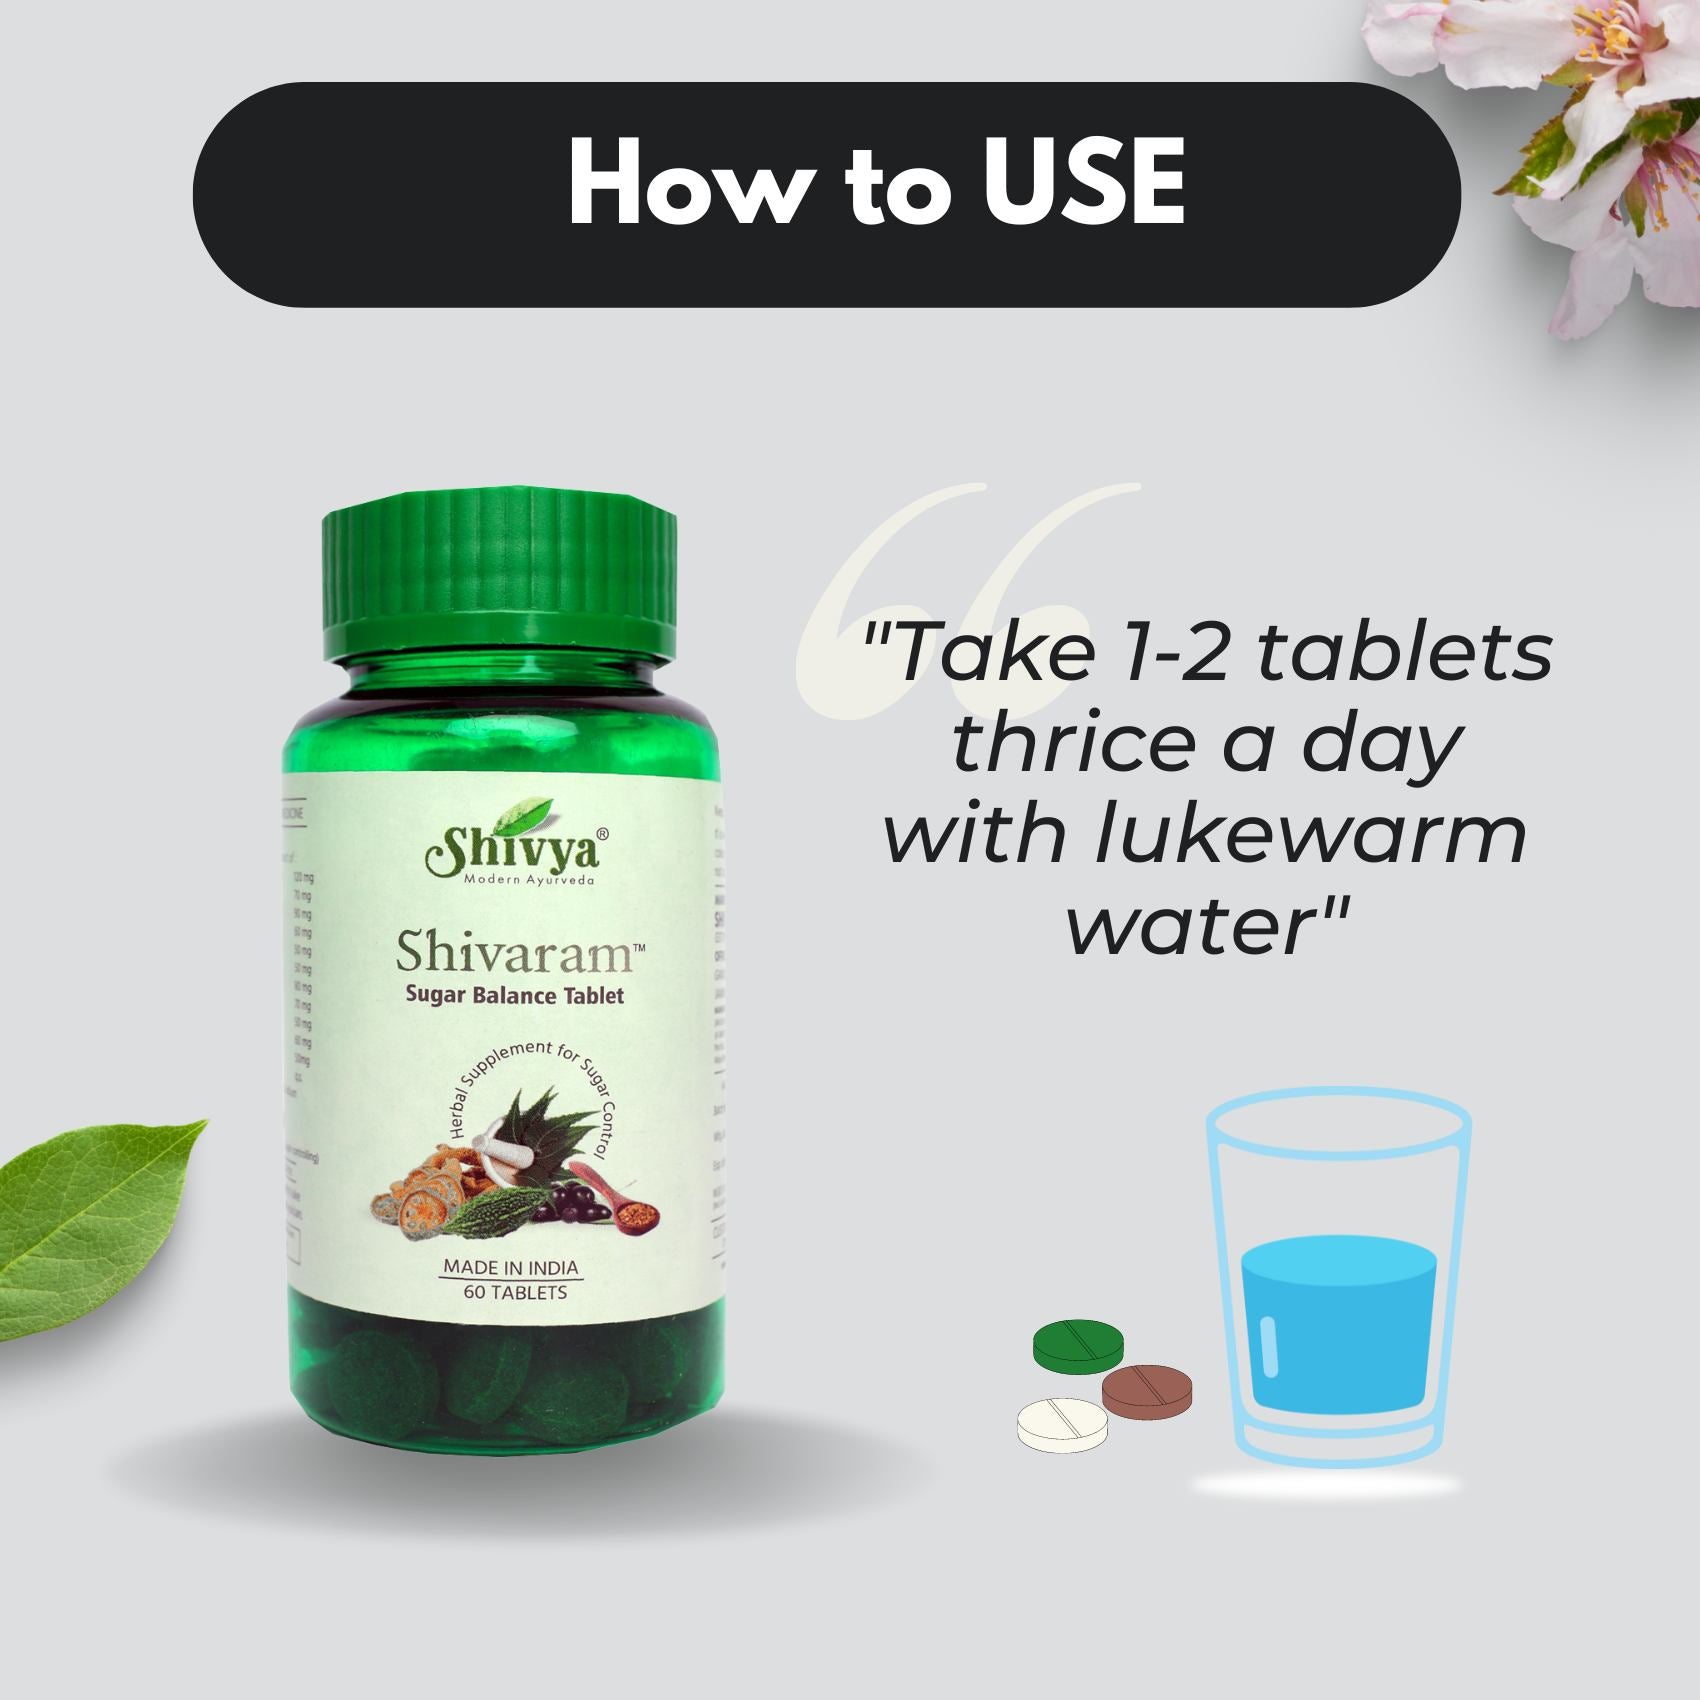 Shivya Ayurvedic Shivaram - Anti-Diabetic 60 Tablets